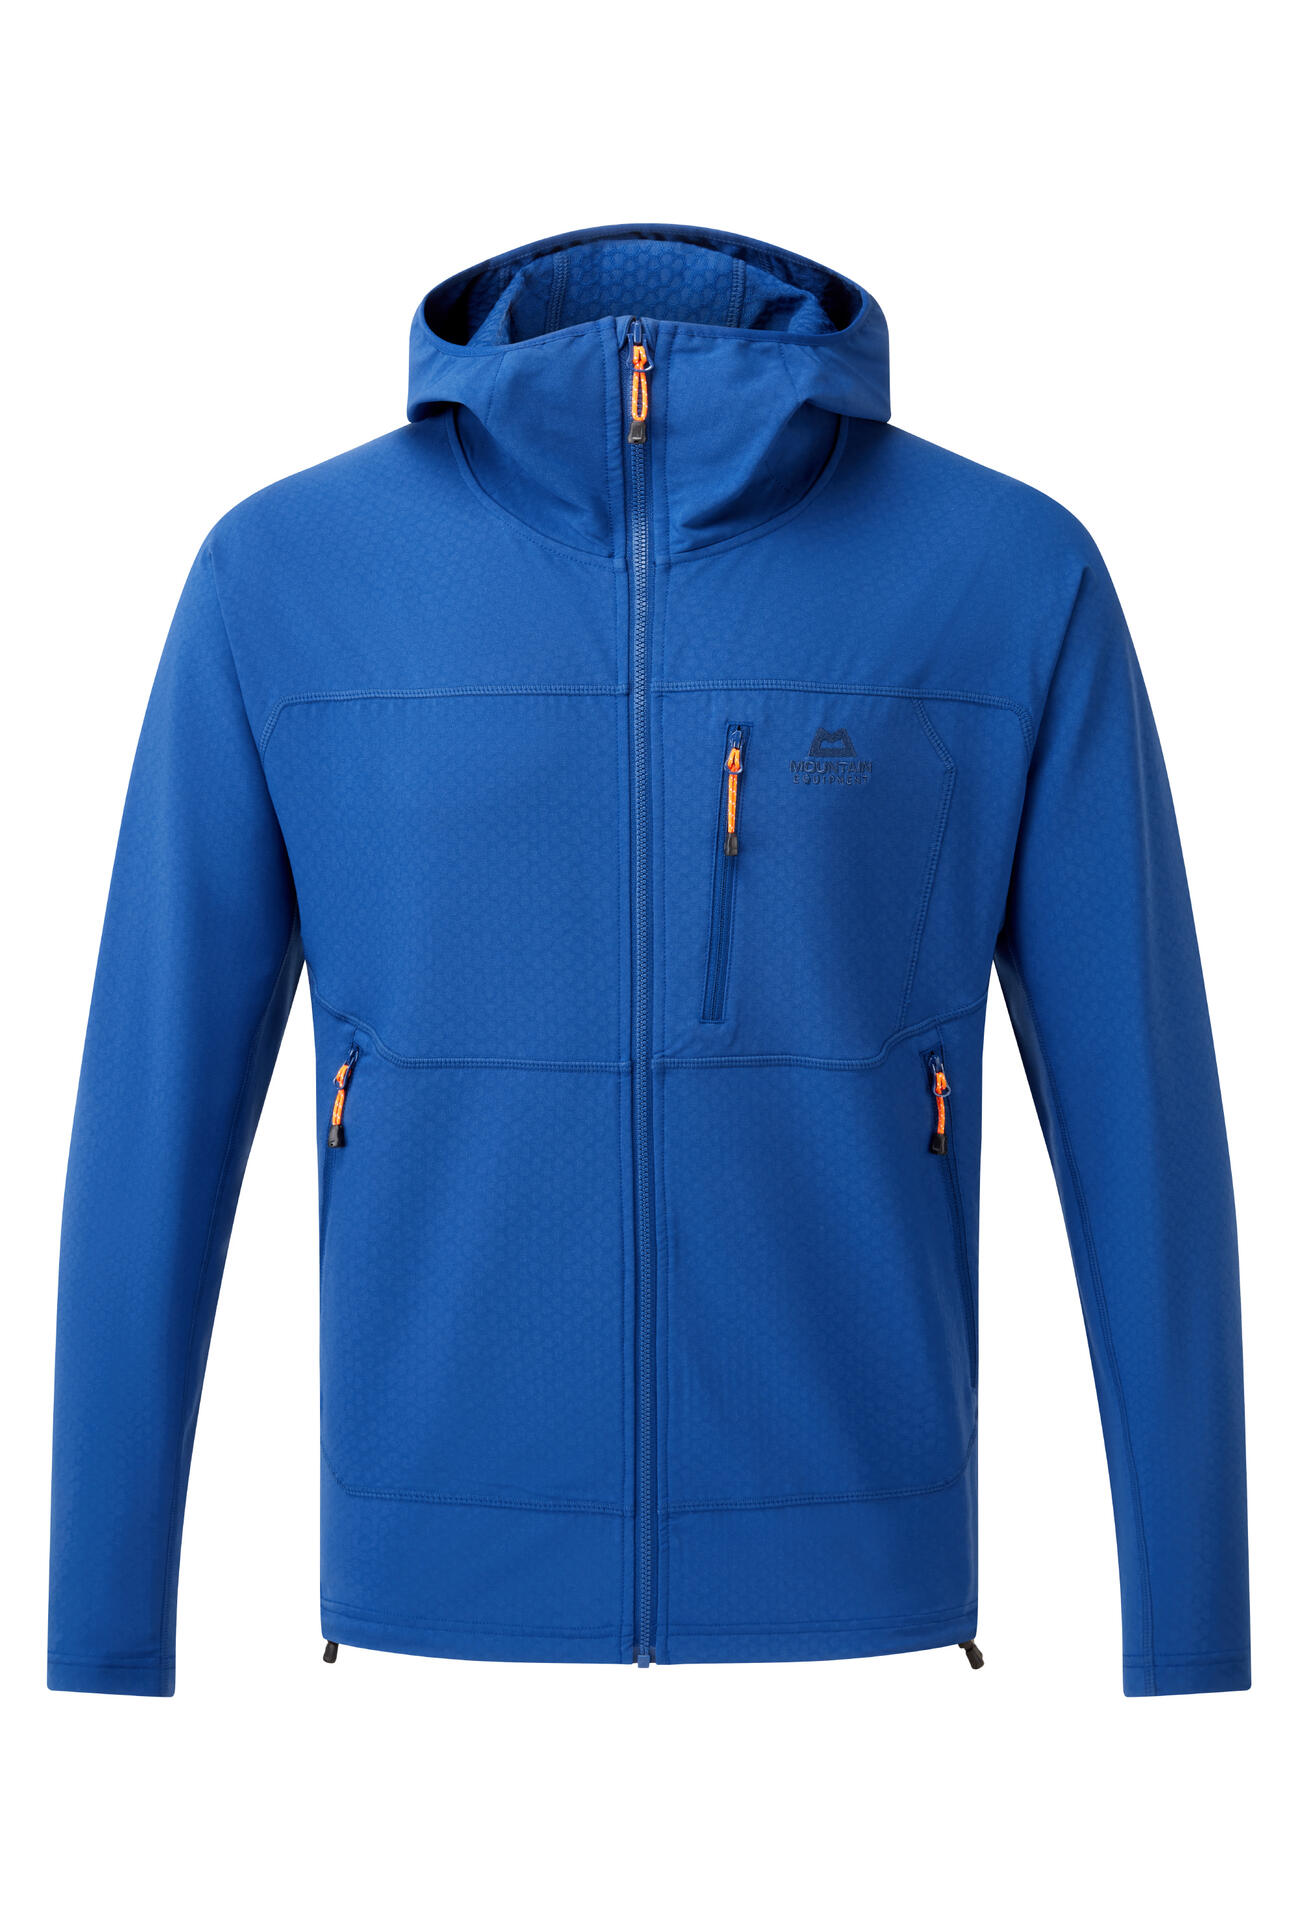 Mountain Equipment Arrow Hooded Jacket Men'S Barva: admiral blue, Velikost: XL